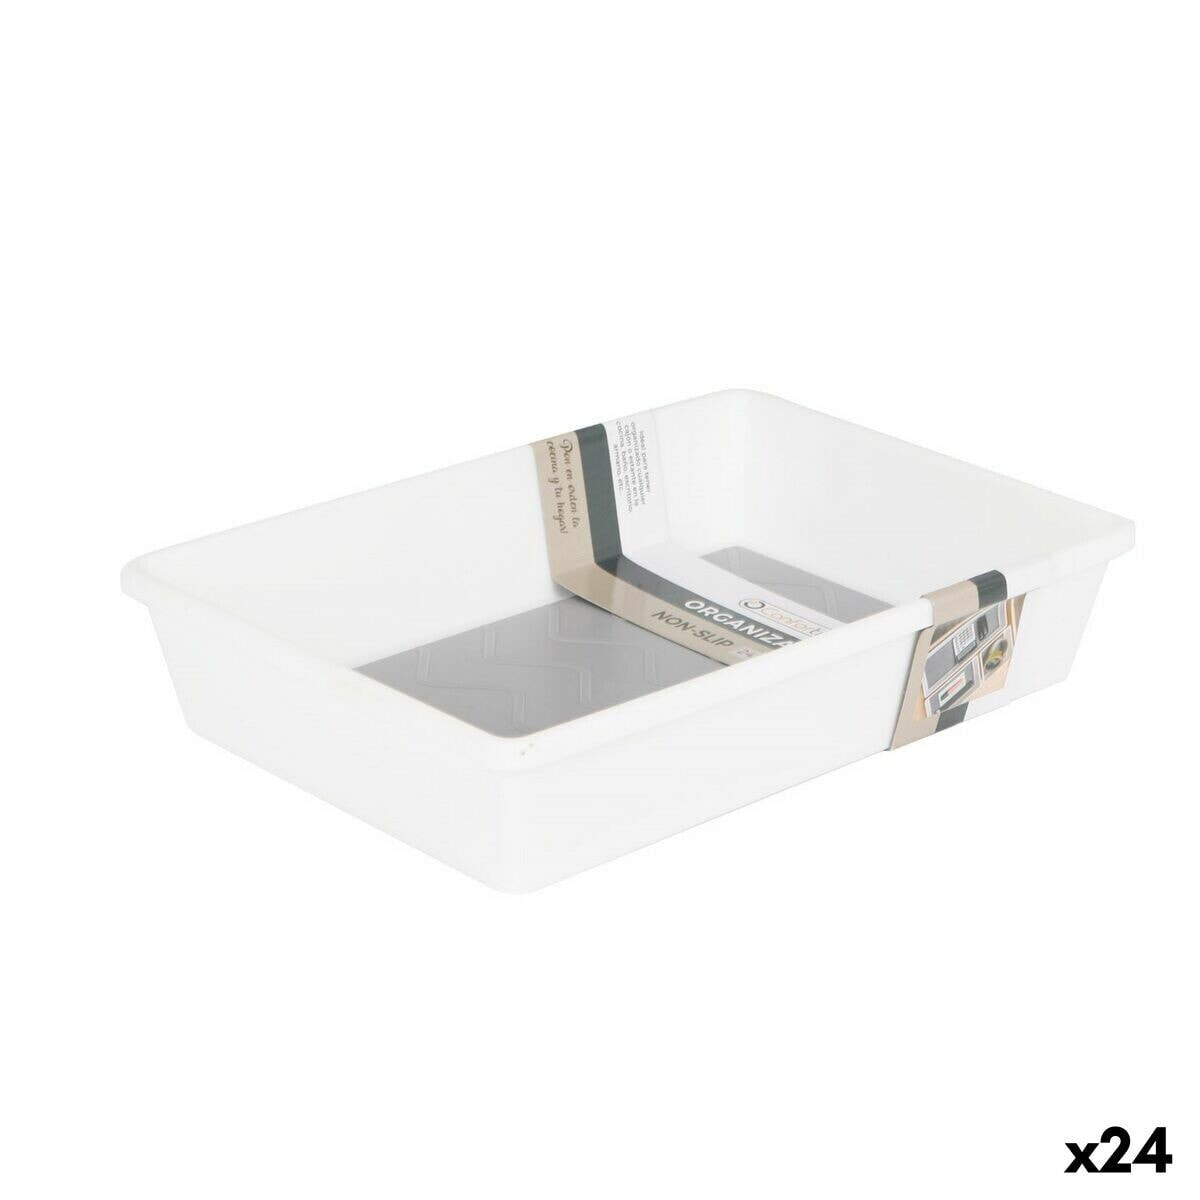 Drawer Organizer Confortime Non-slip base White 24,5 x 17 x 5 cm (24 Units)